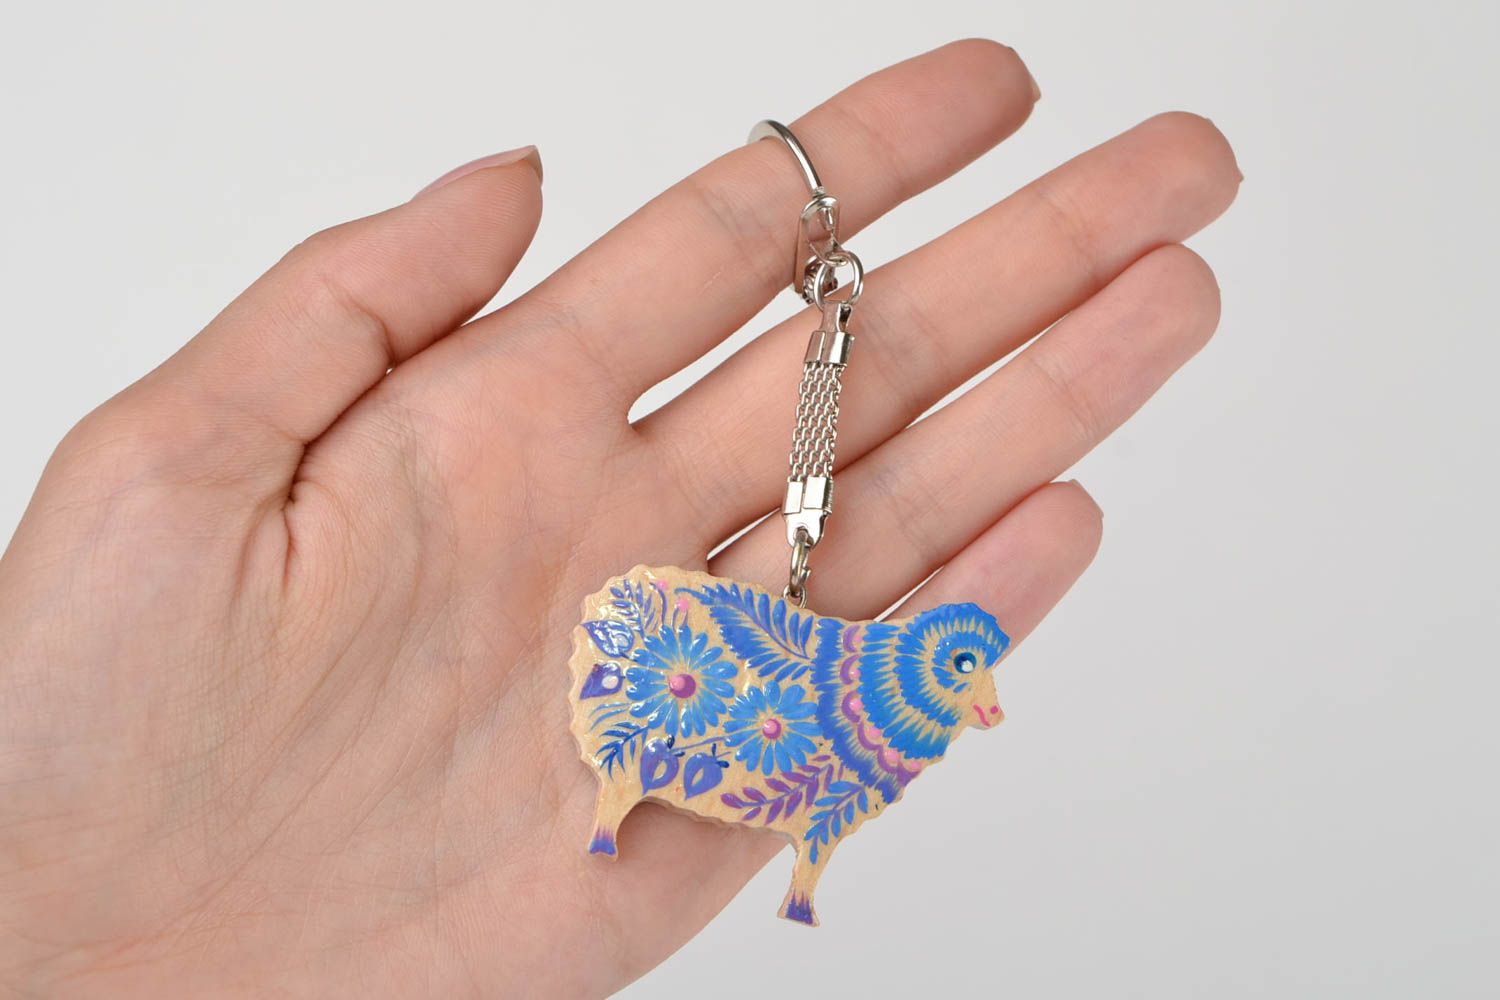 Designer keychain handmade accessories souvenir ideas wooden gifts cool keyrings photo 7